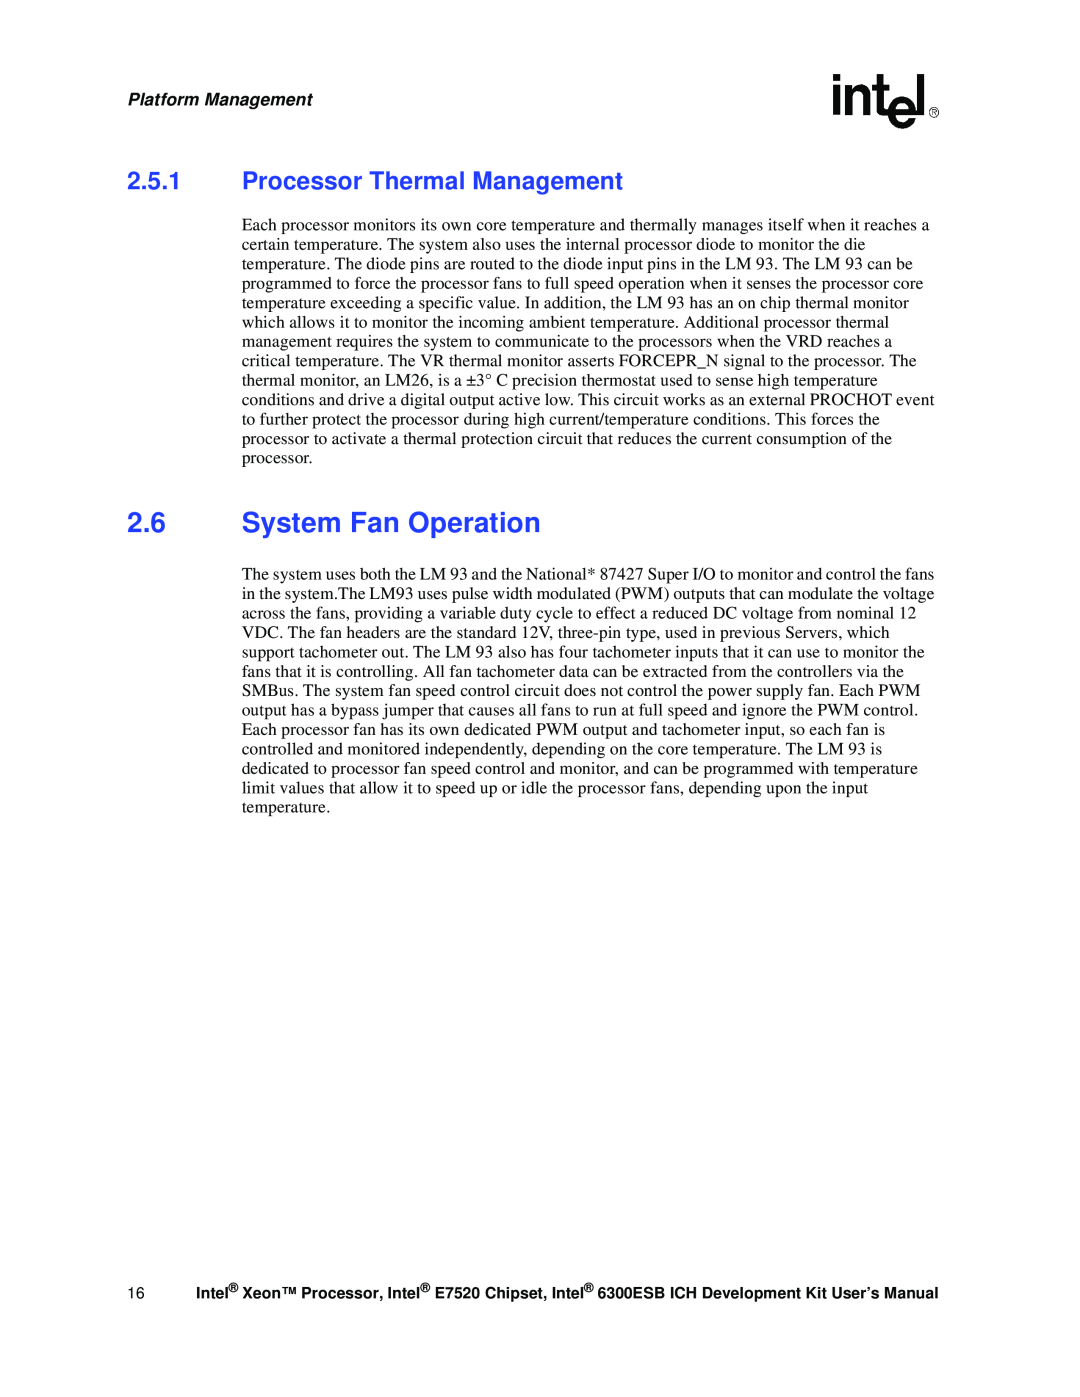 Intel Xeon, 6300ESB ICH user manual System Fan Operation, Processor Thermal Management, Platform Management 